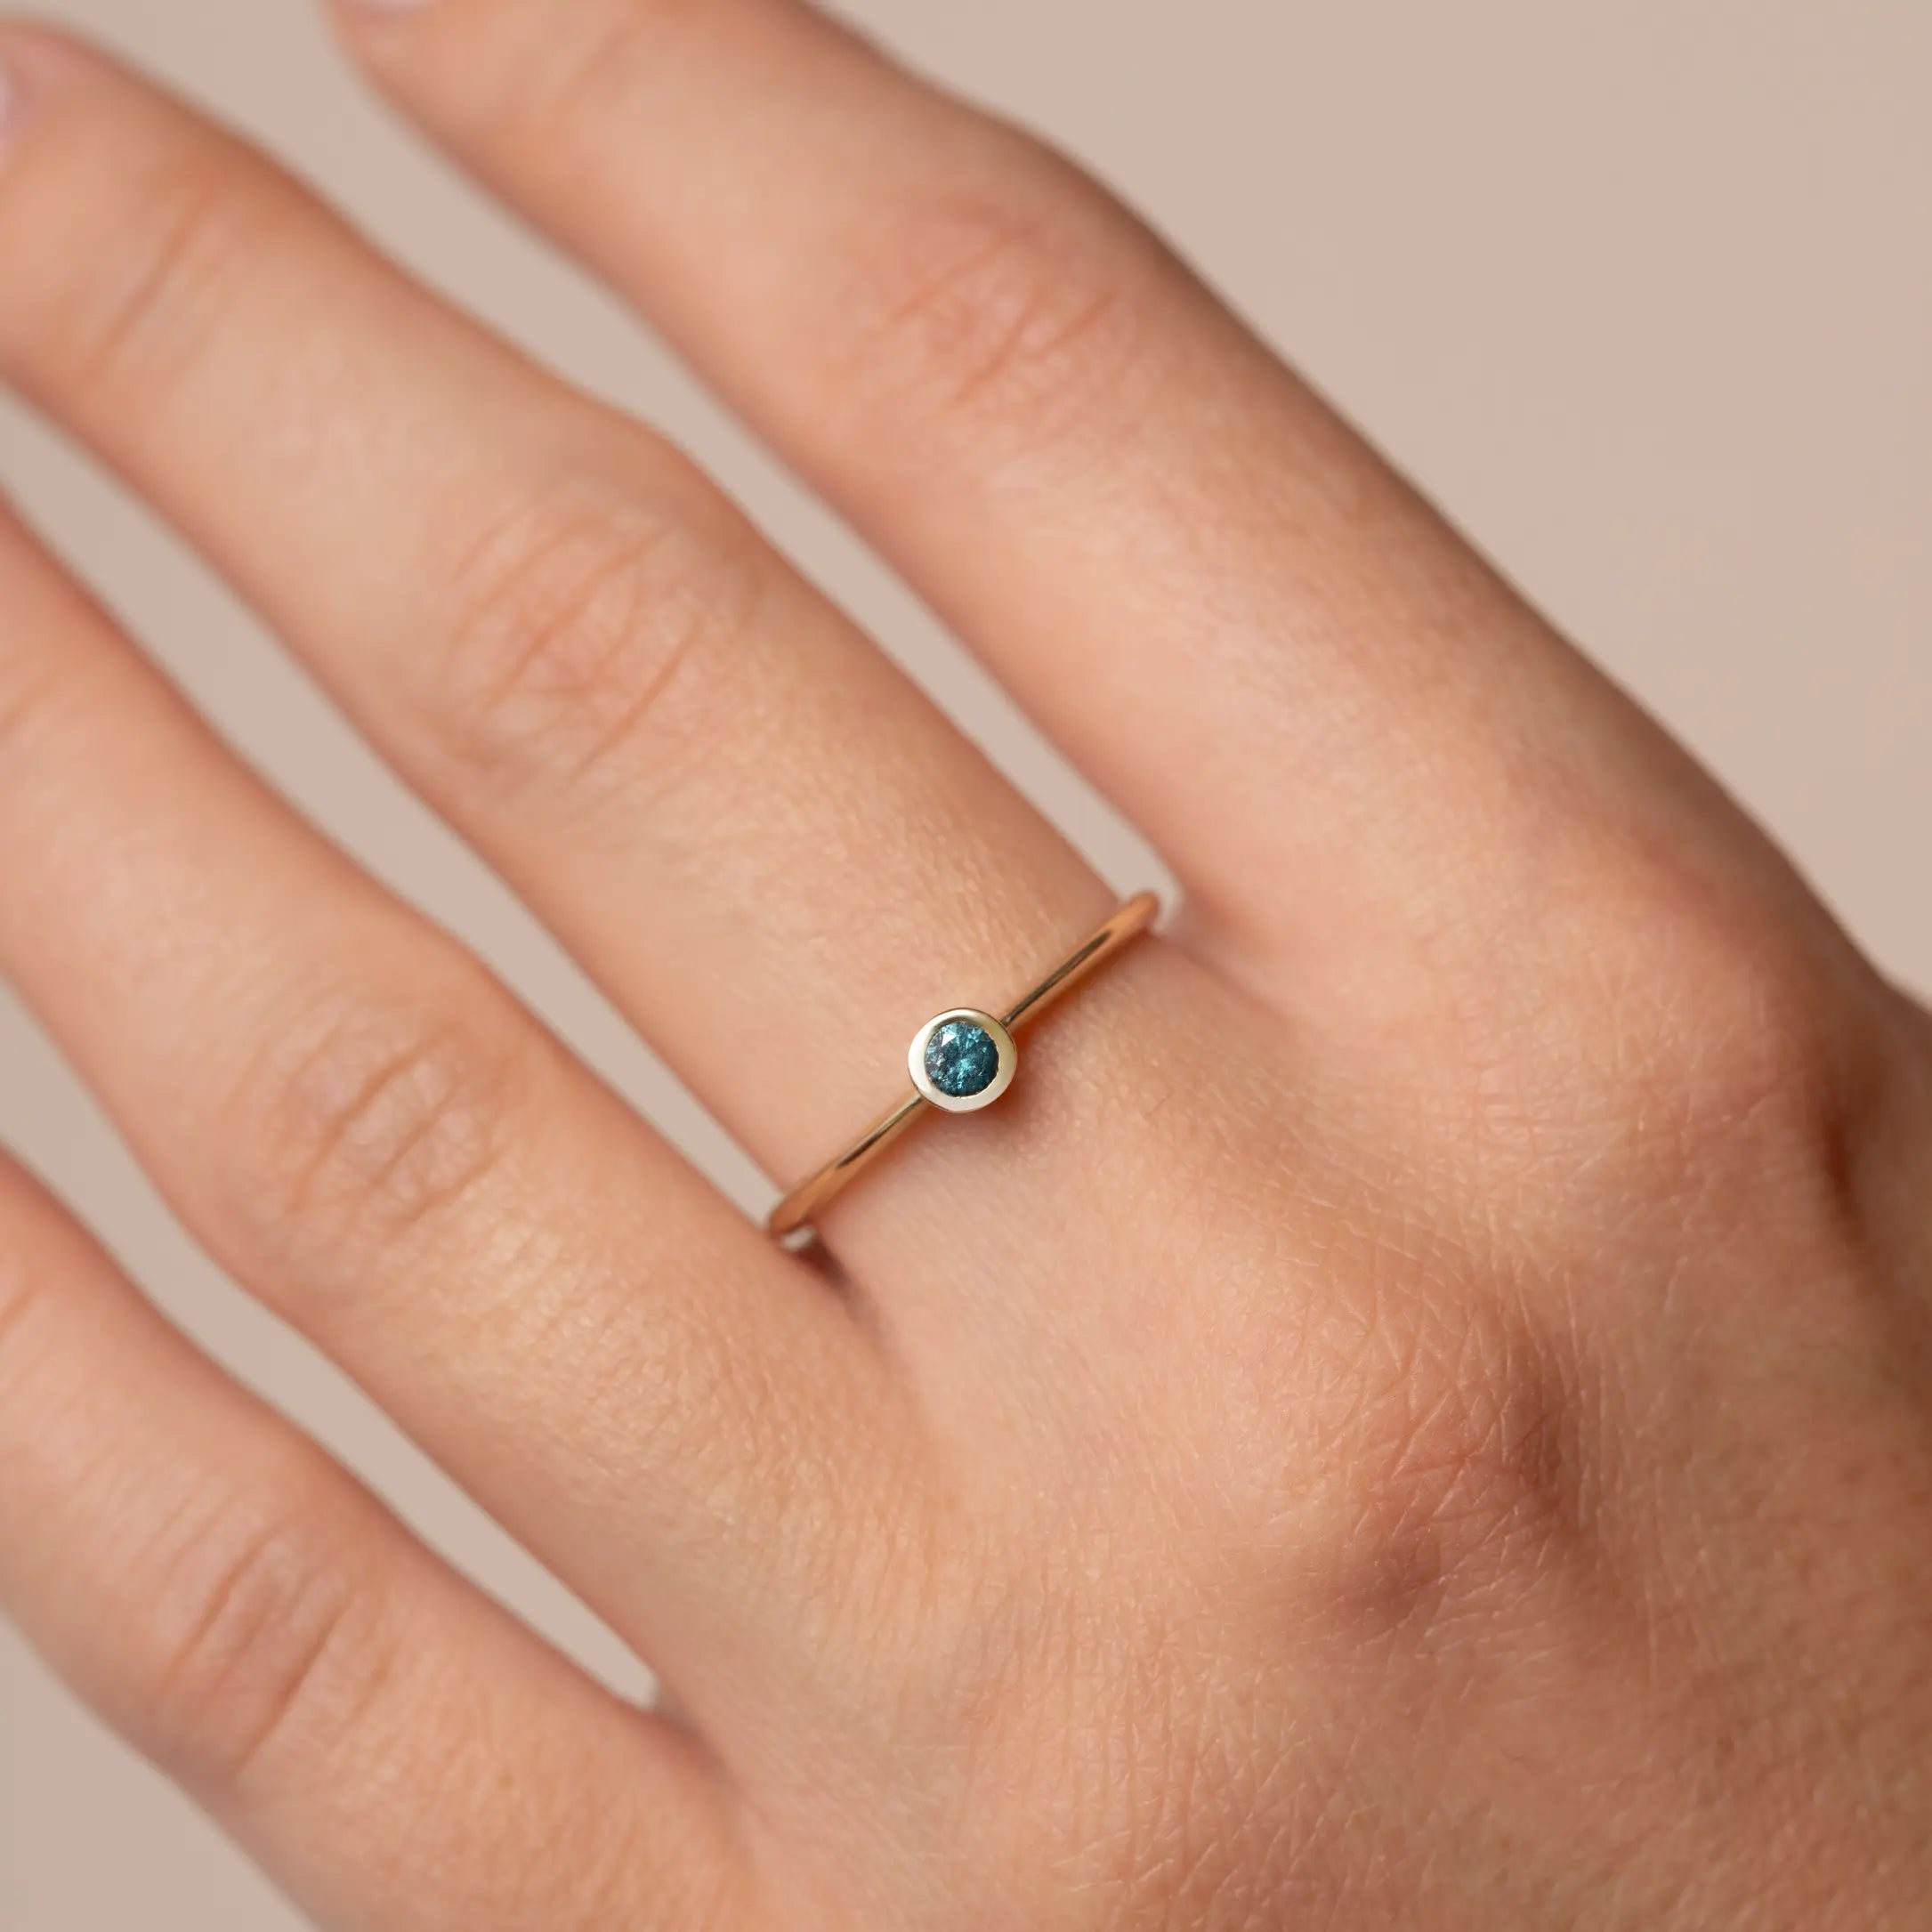 14K Solitaire Blue Diamond Ring